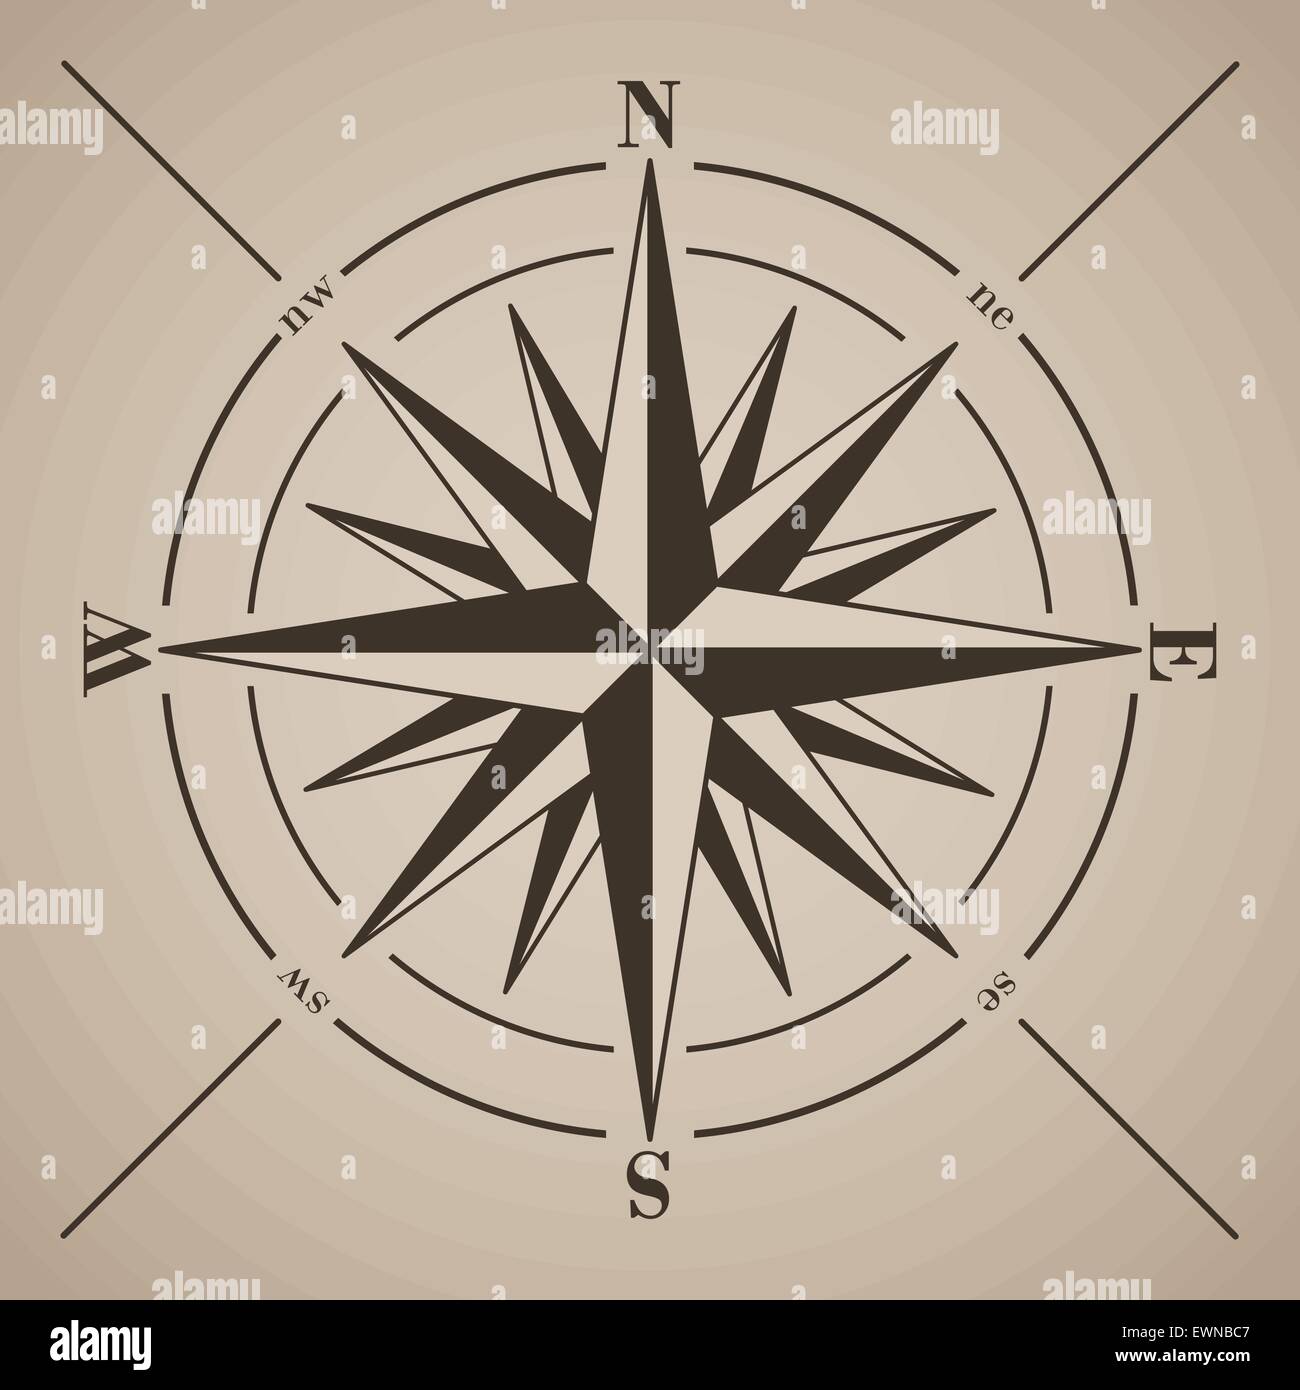 Compass rose. Vector illustration. Stock Vector